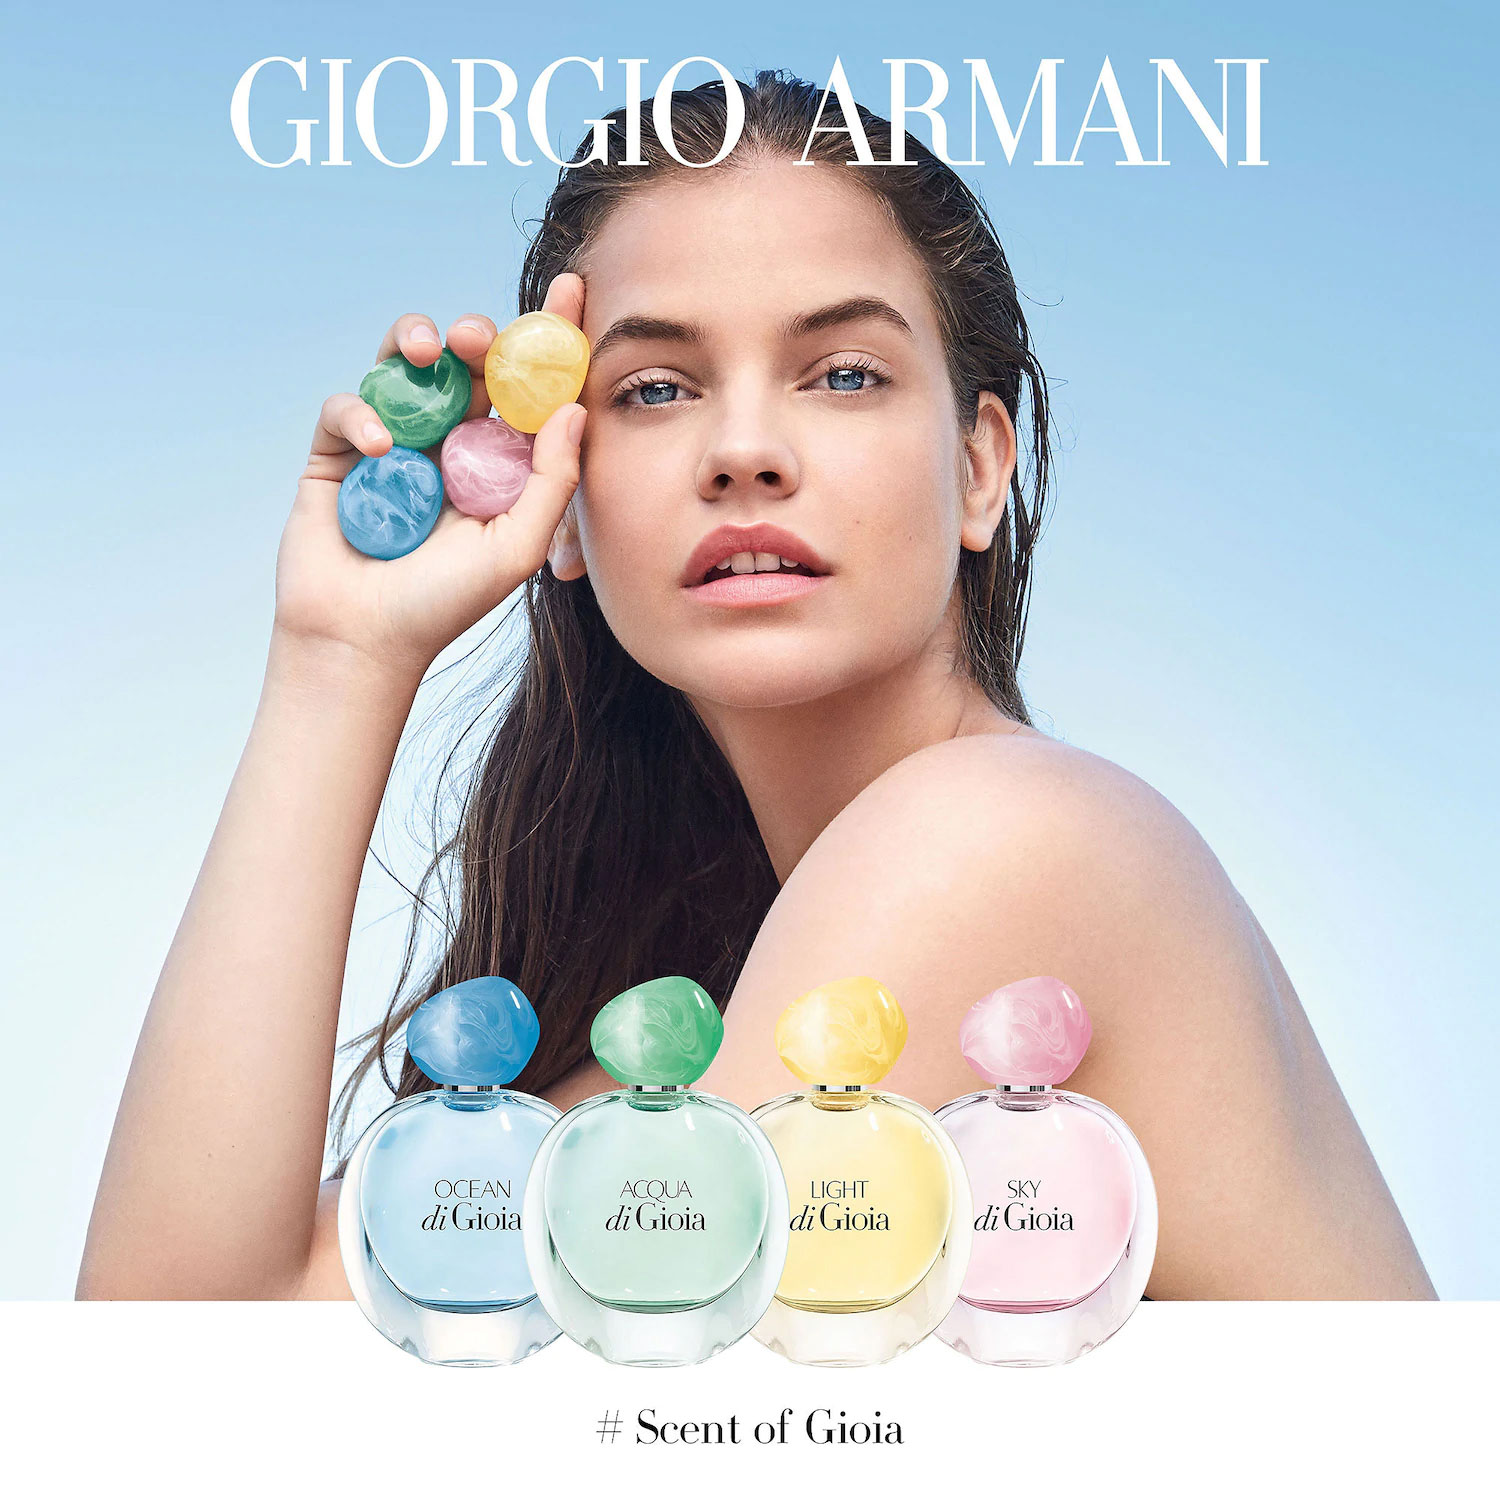 Giorgio Armani Ocean di Gioia Fragrance Ad